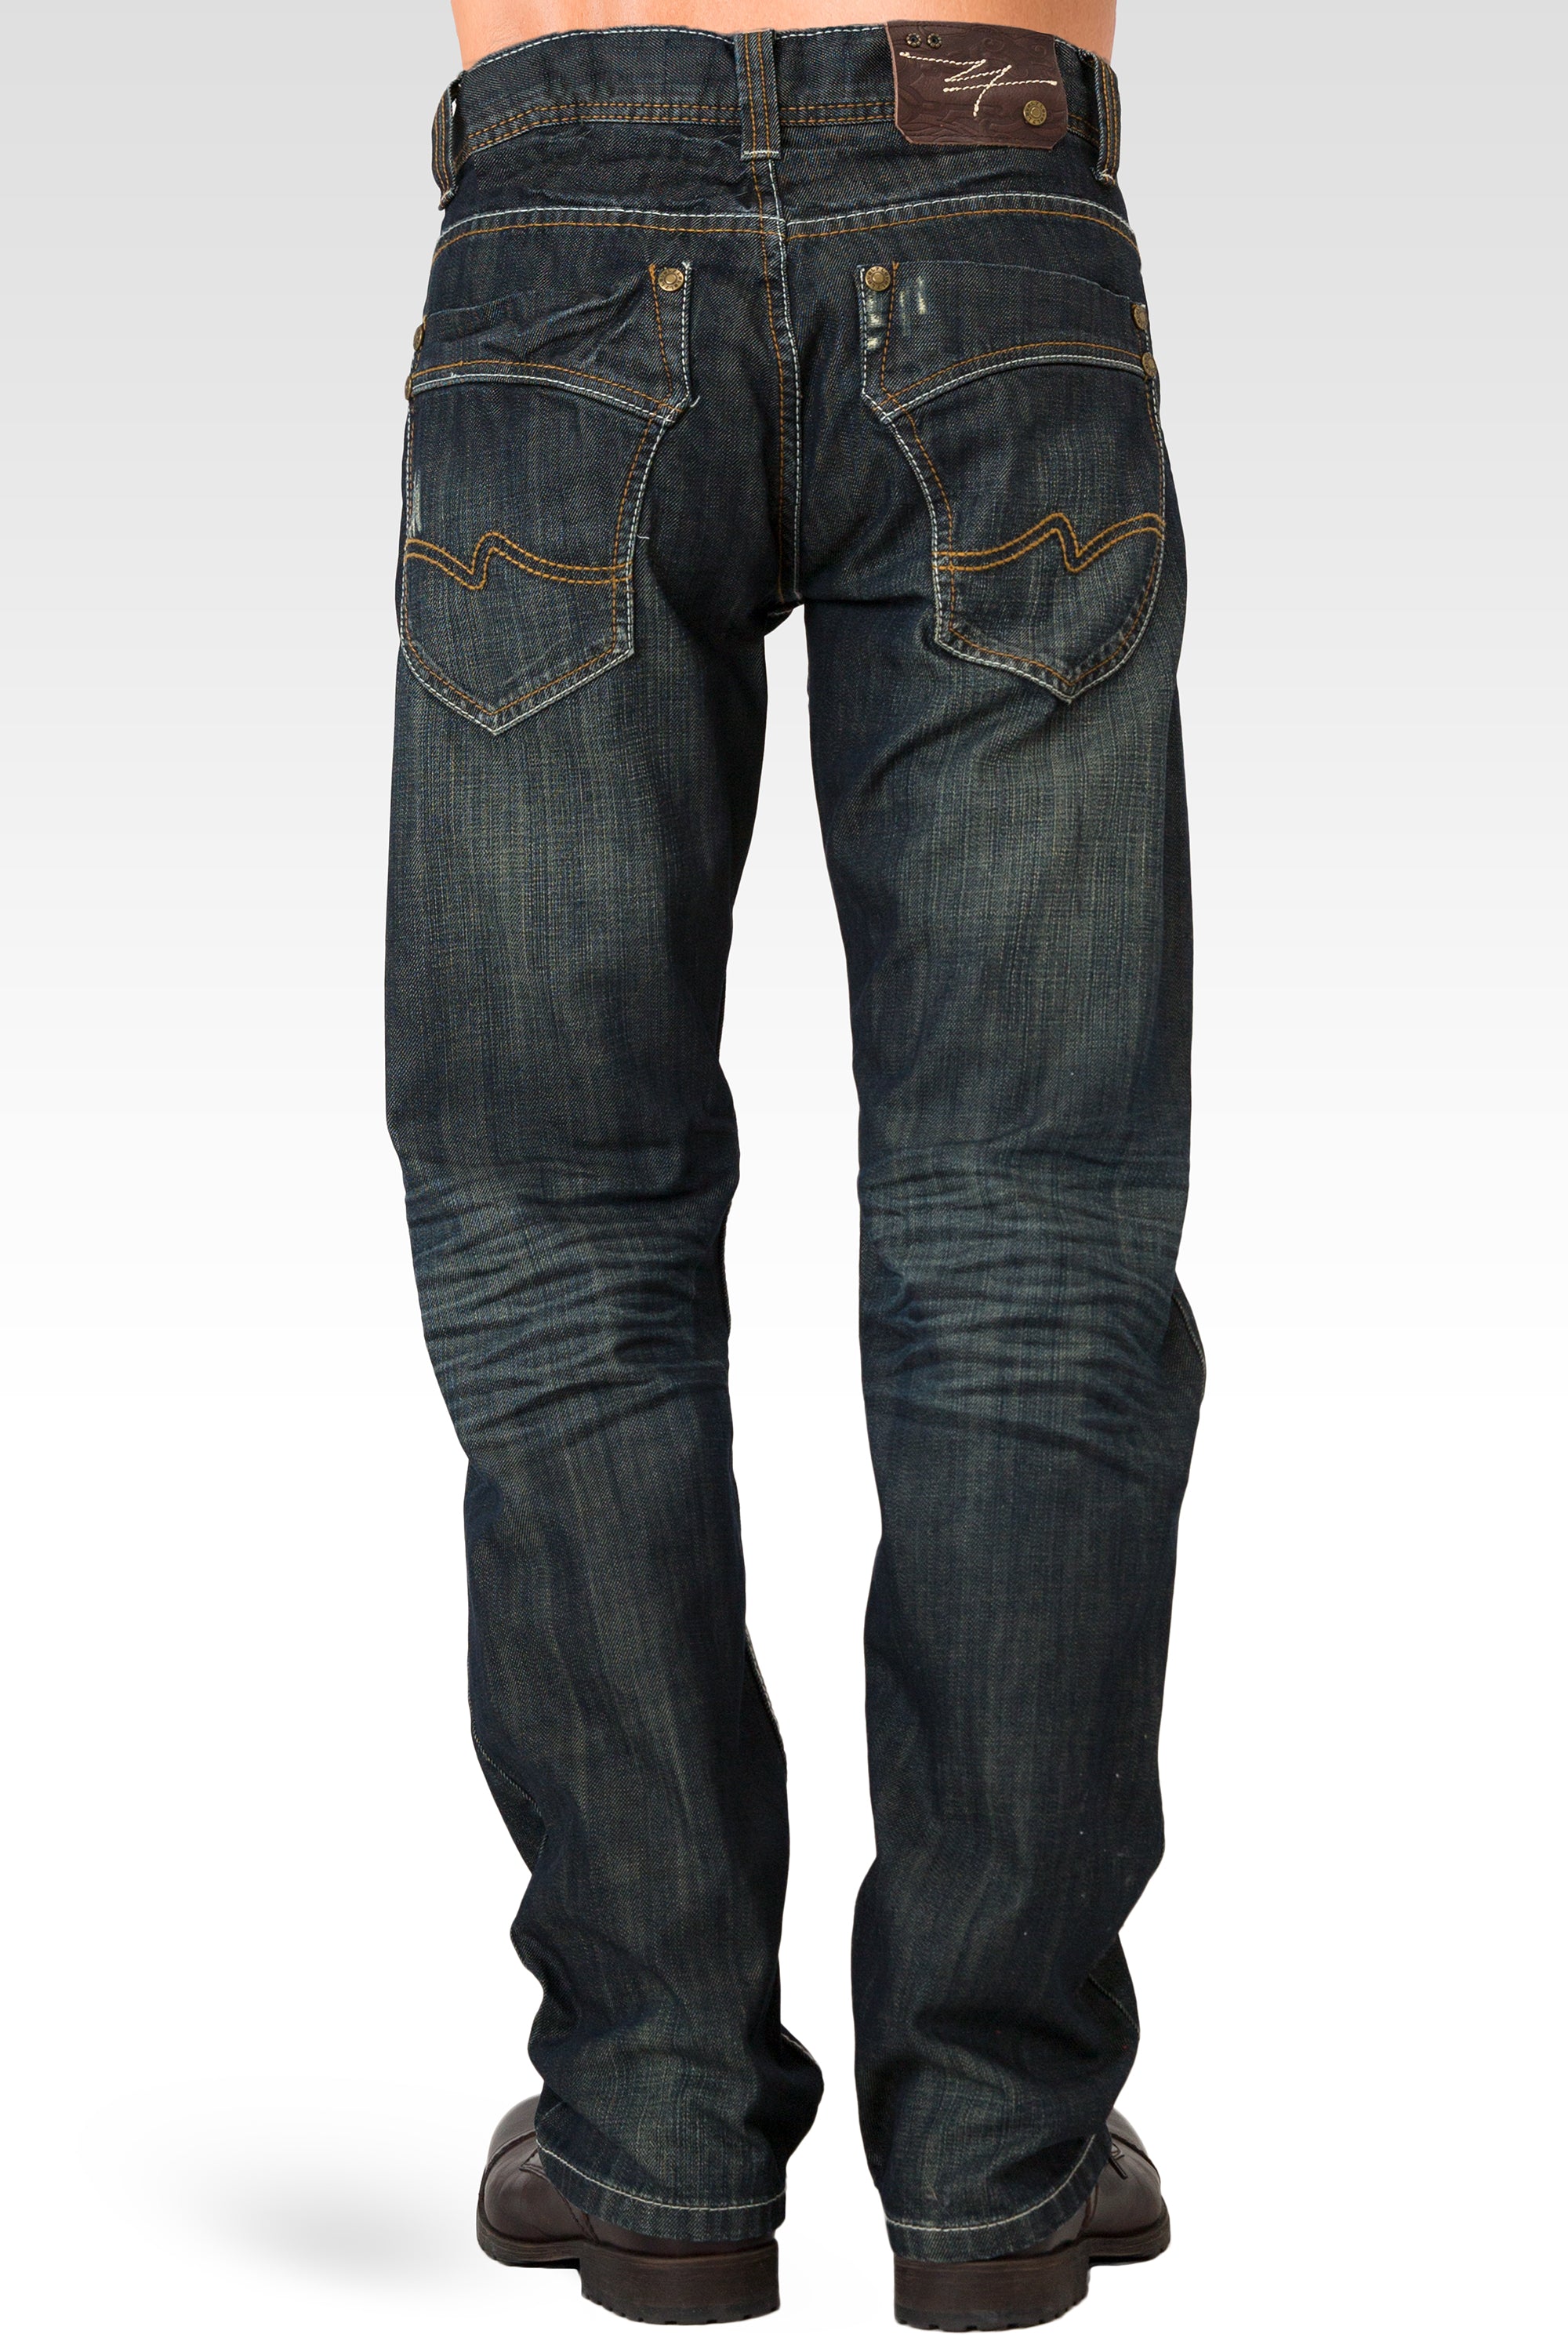 LV Lavish Premium Jeans Men 30x30 Black Distressed Urban Streetwear